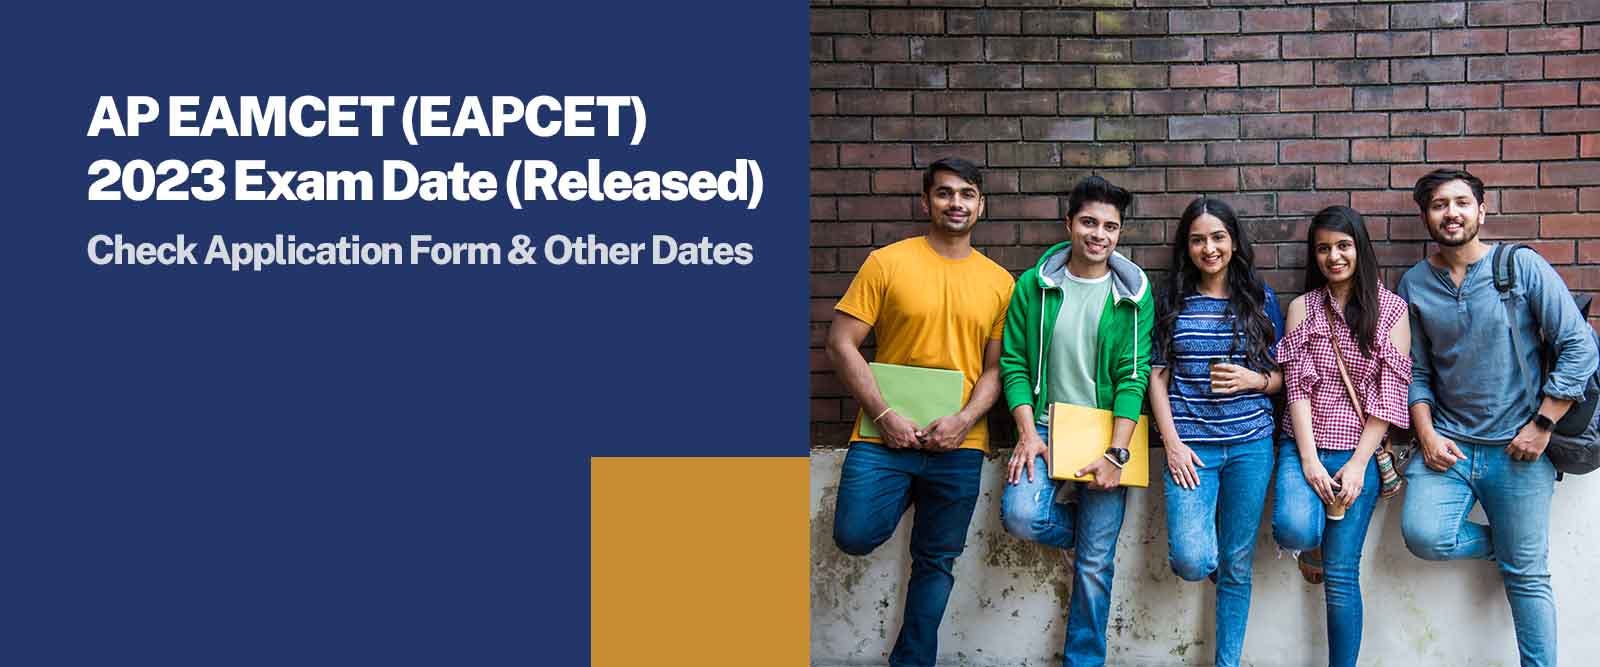 AP EAMCET (EAPCET) 2023 Exam Date (Released)